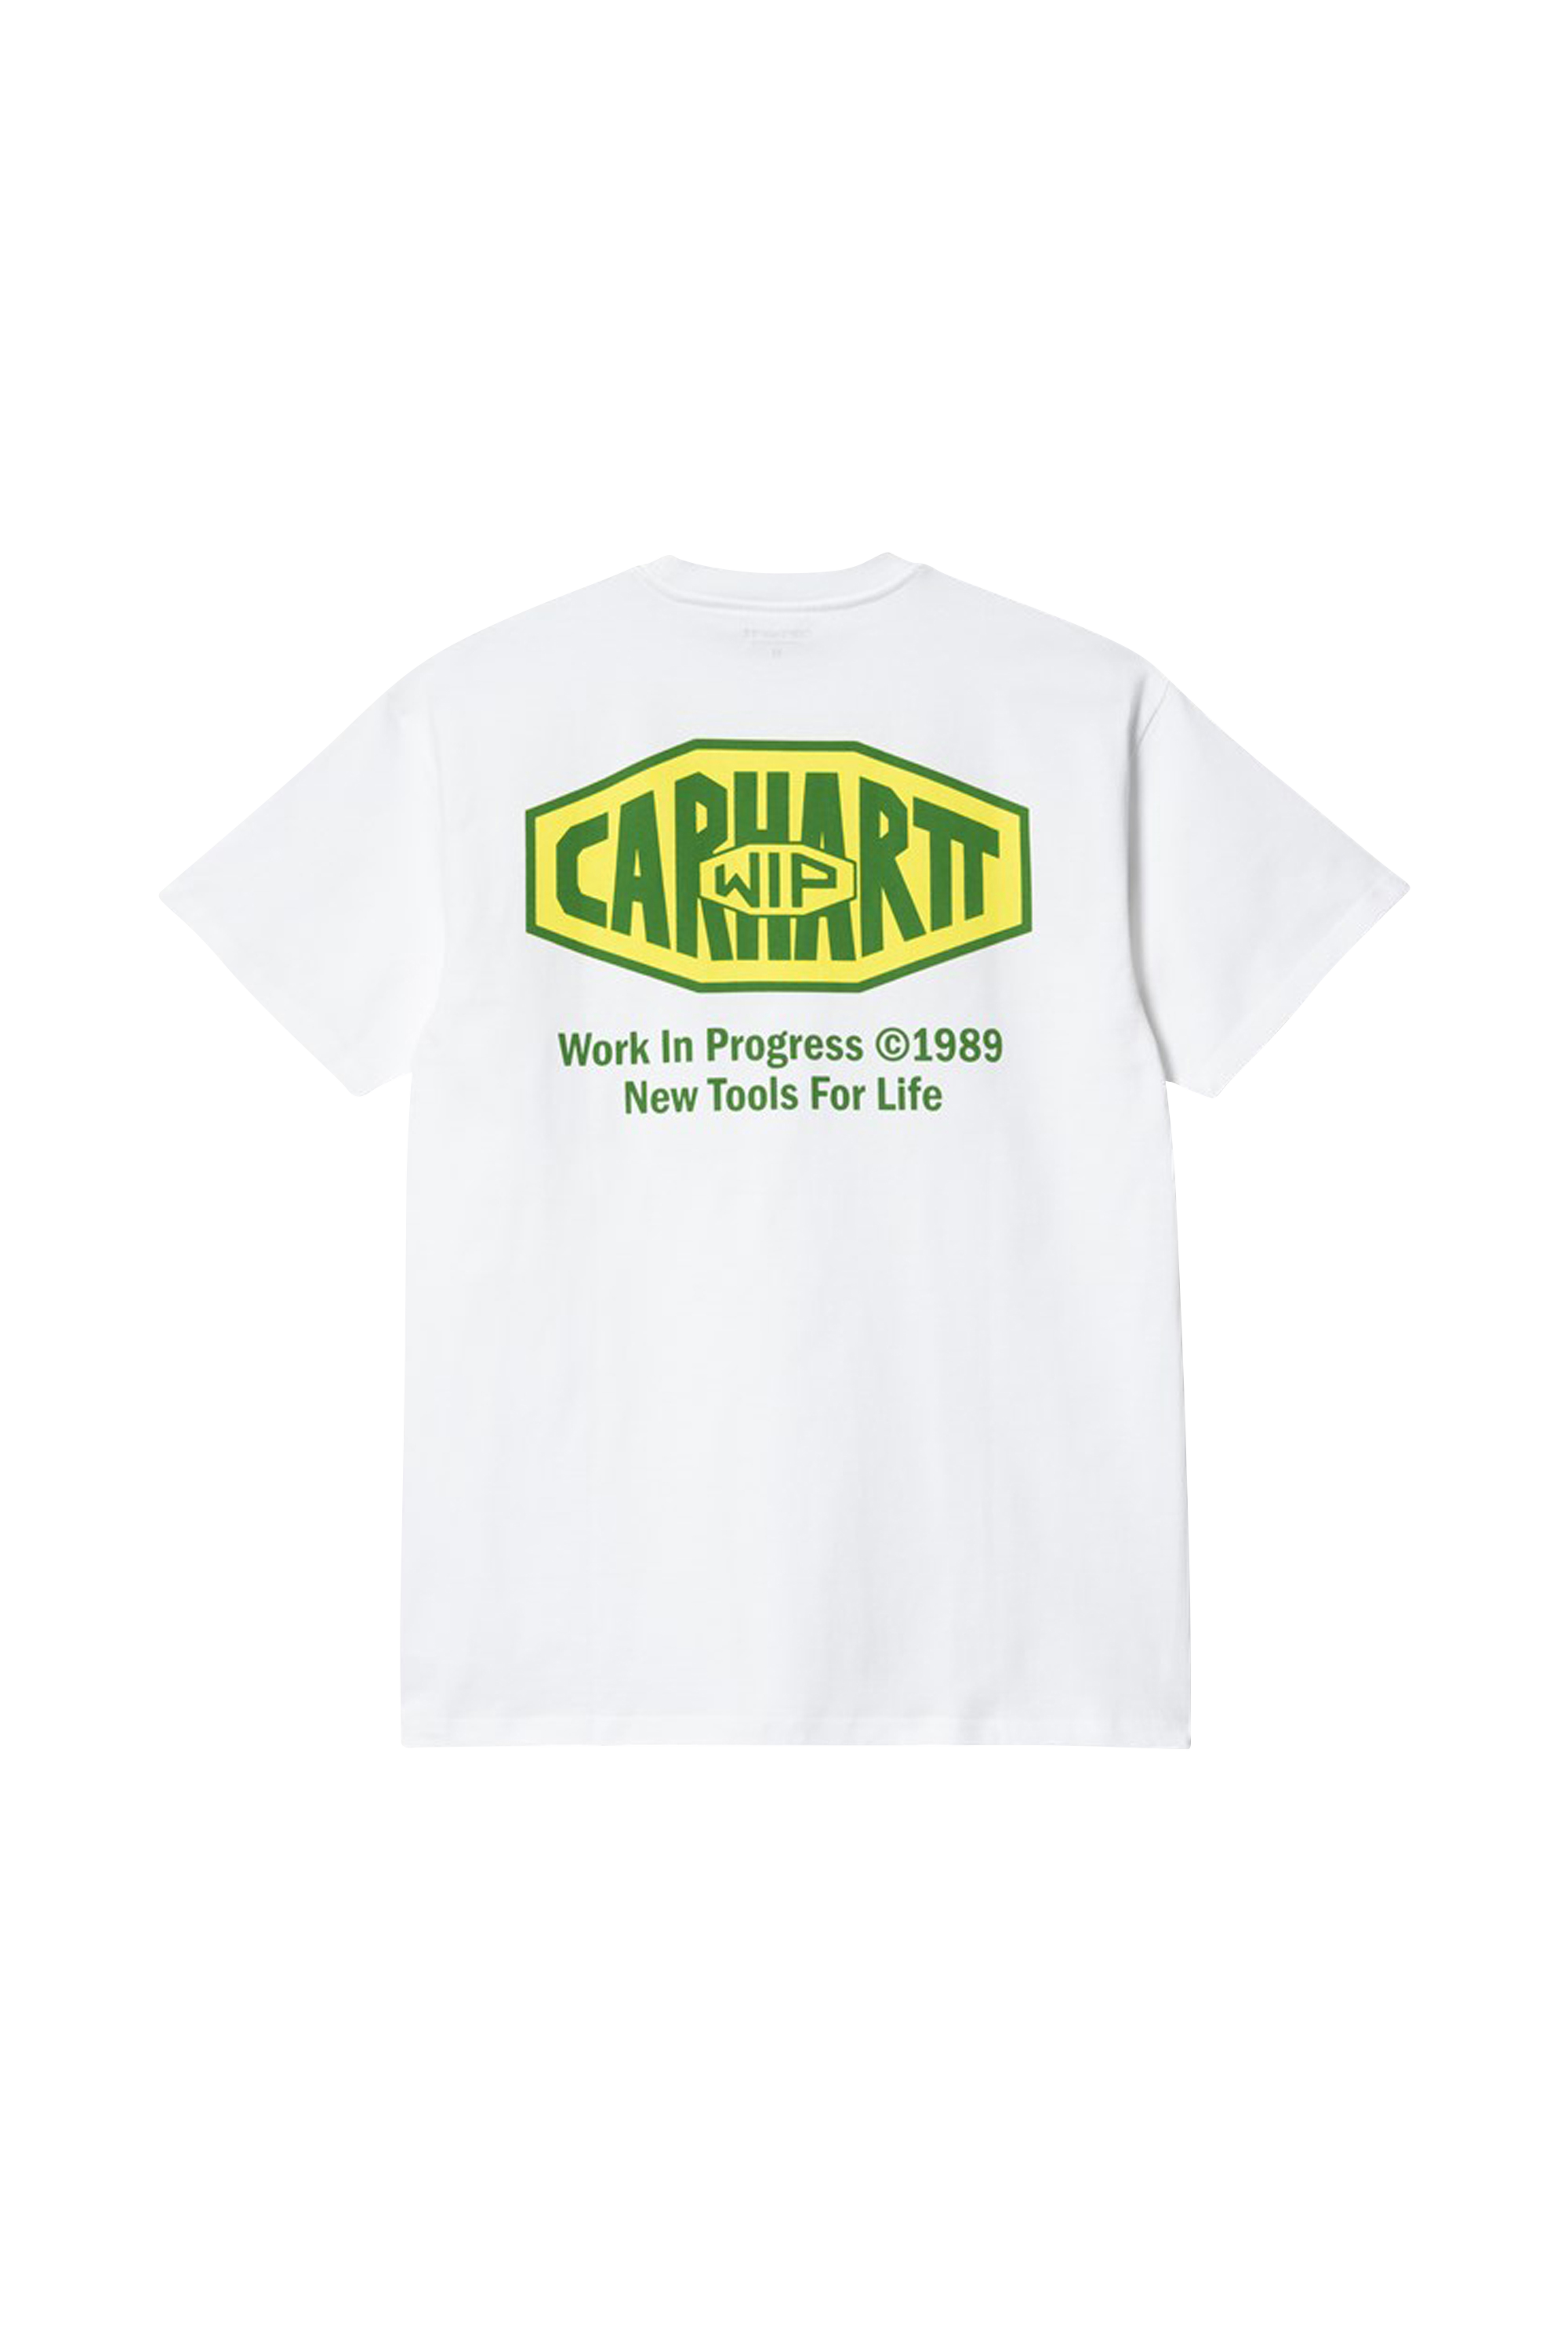 Carhartt Wip Citadium Homme Vêtements Tops & T-shirts T-shirts Manches courtes 